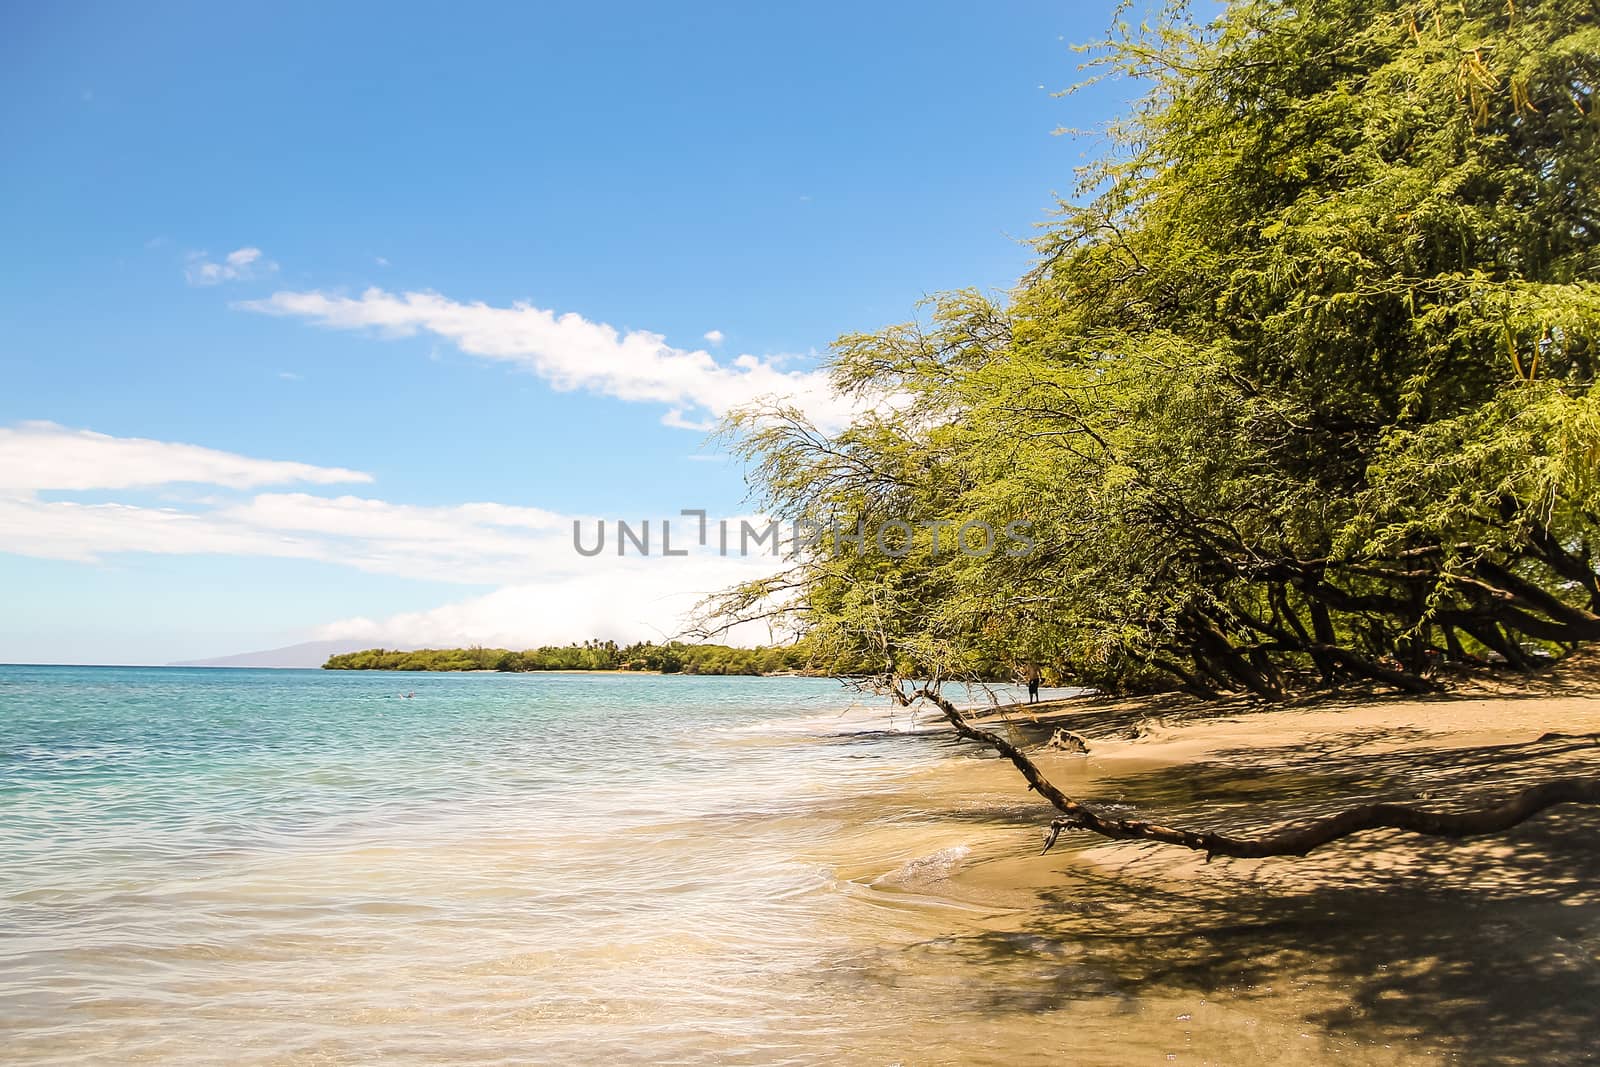 Beautiful deserted Maui beach under blue sky